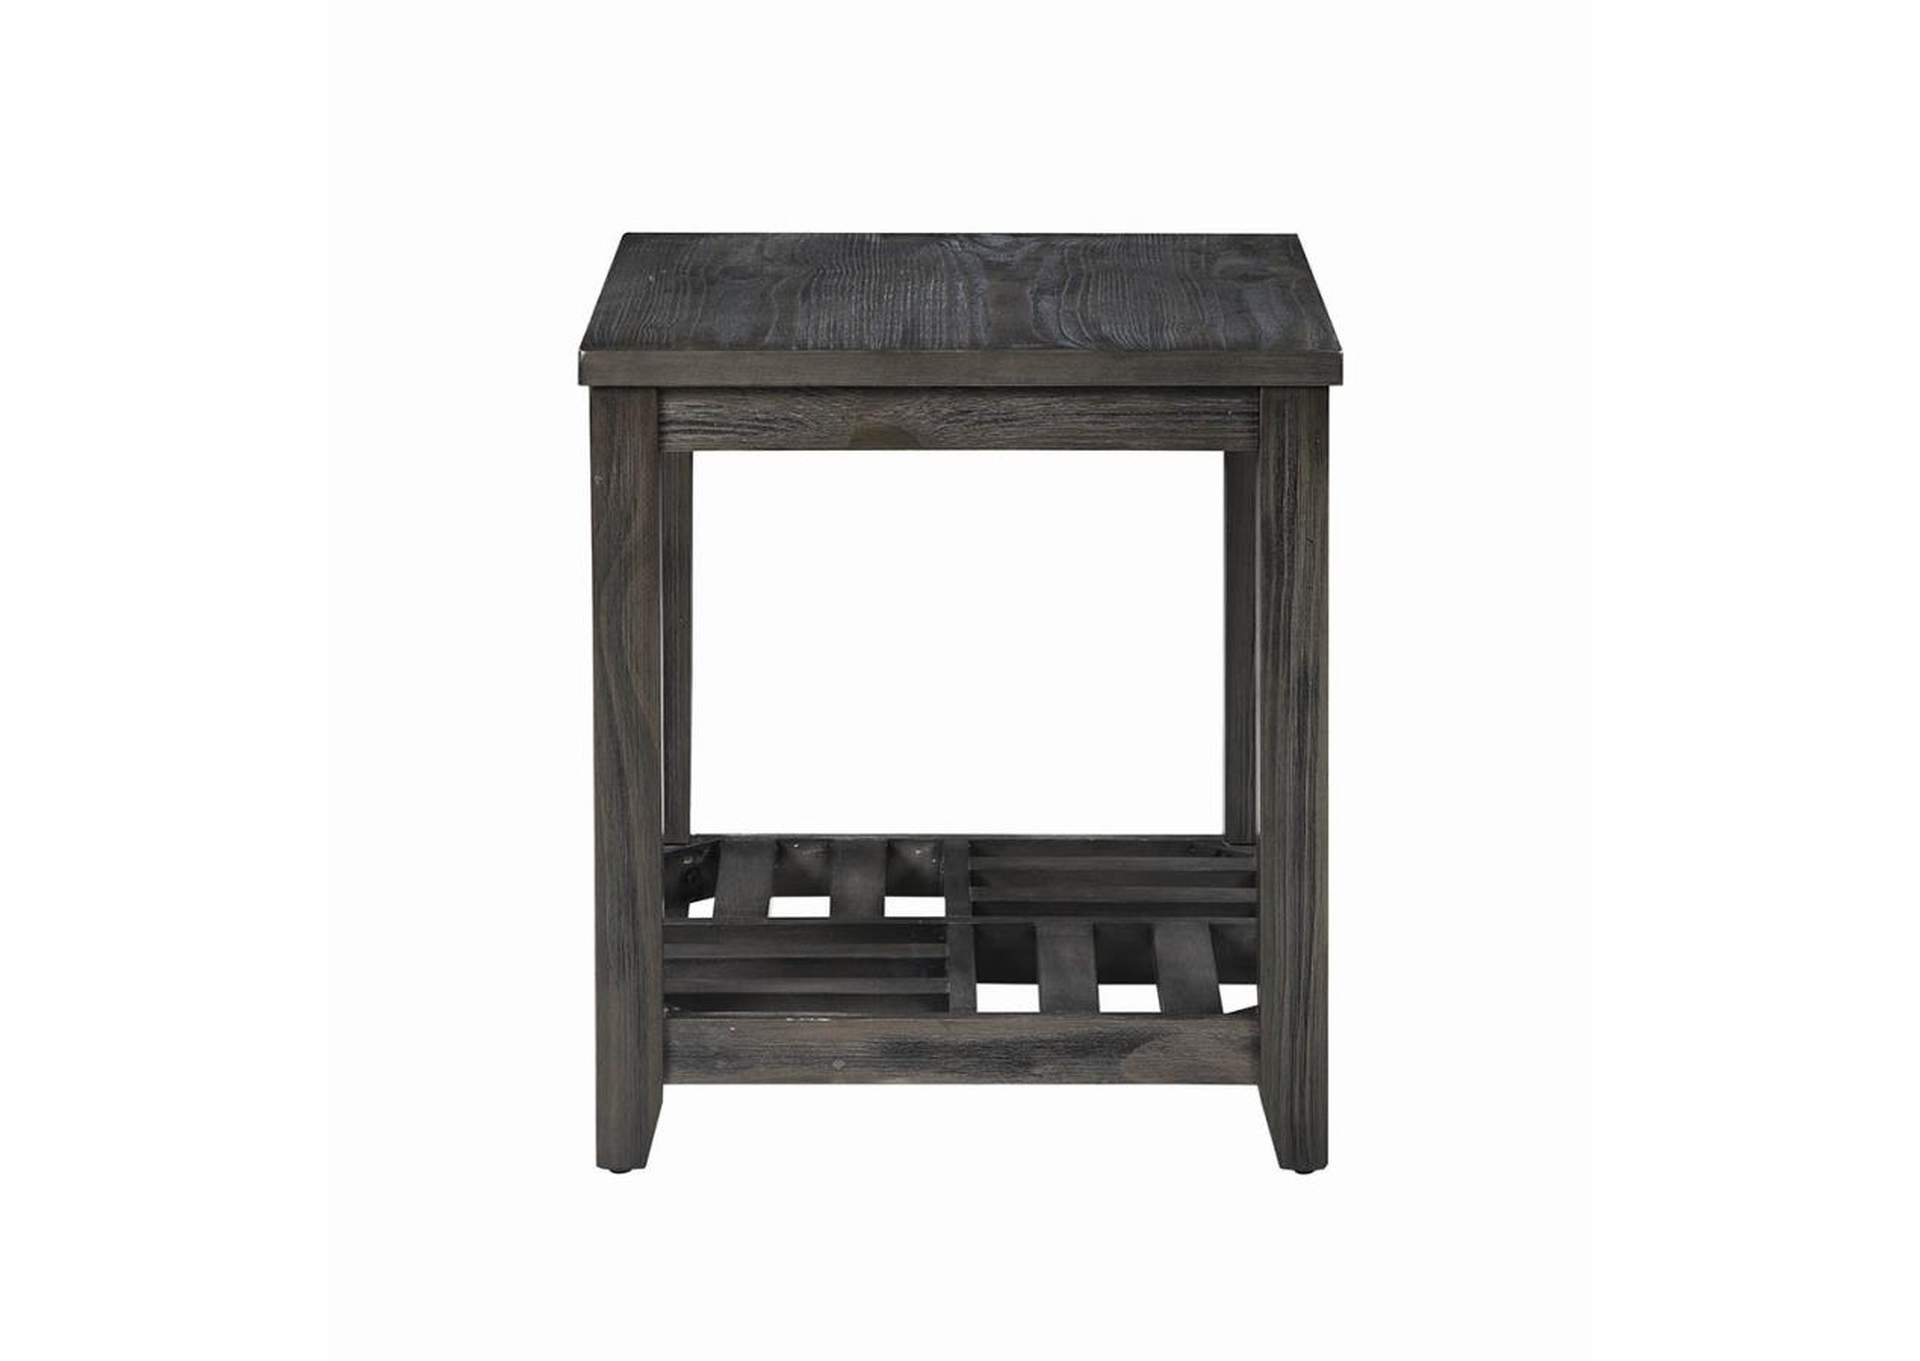 1-shelf Rectangular End Table Grey,Coaster Furniture